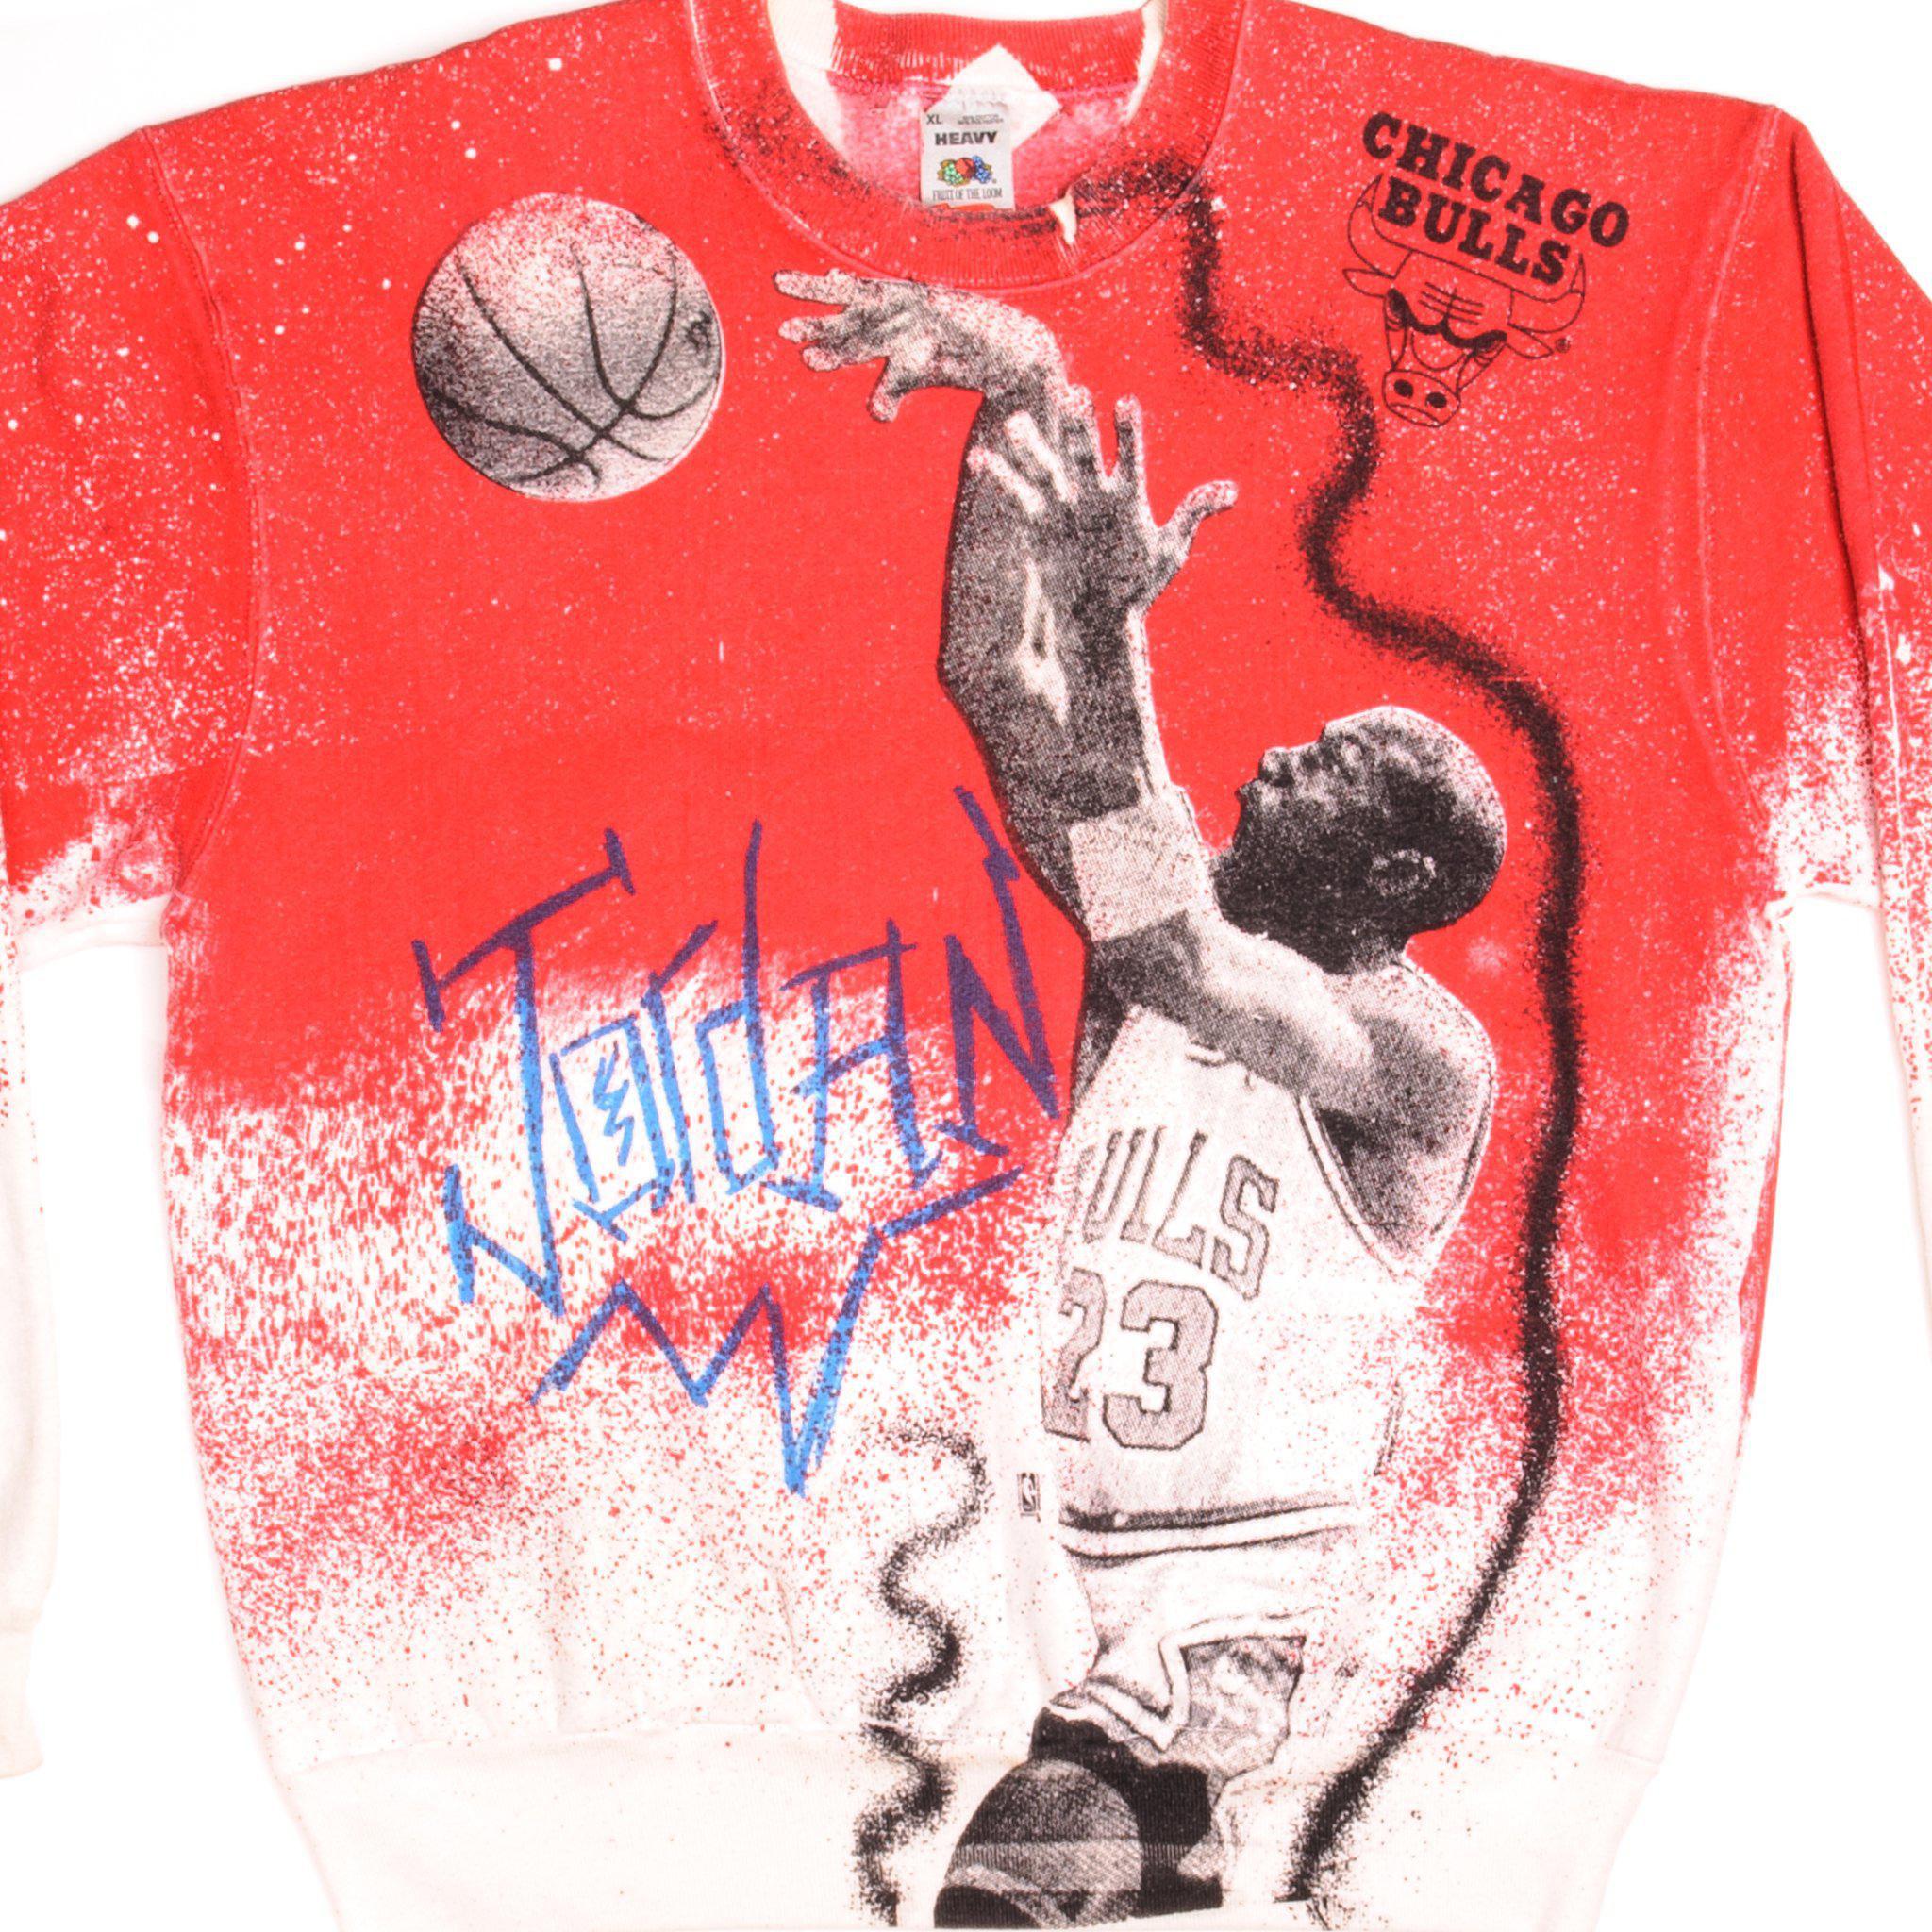 Vintage Nike NBA Chicago Bulls Michael Jordan Jersey Size XL 1990s